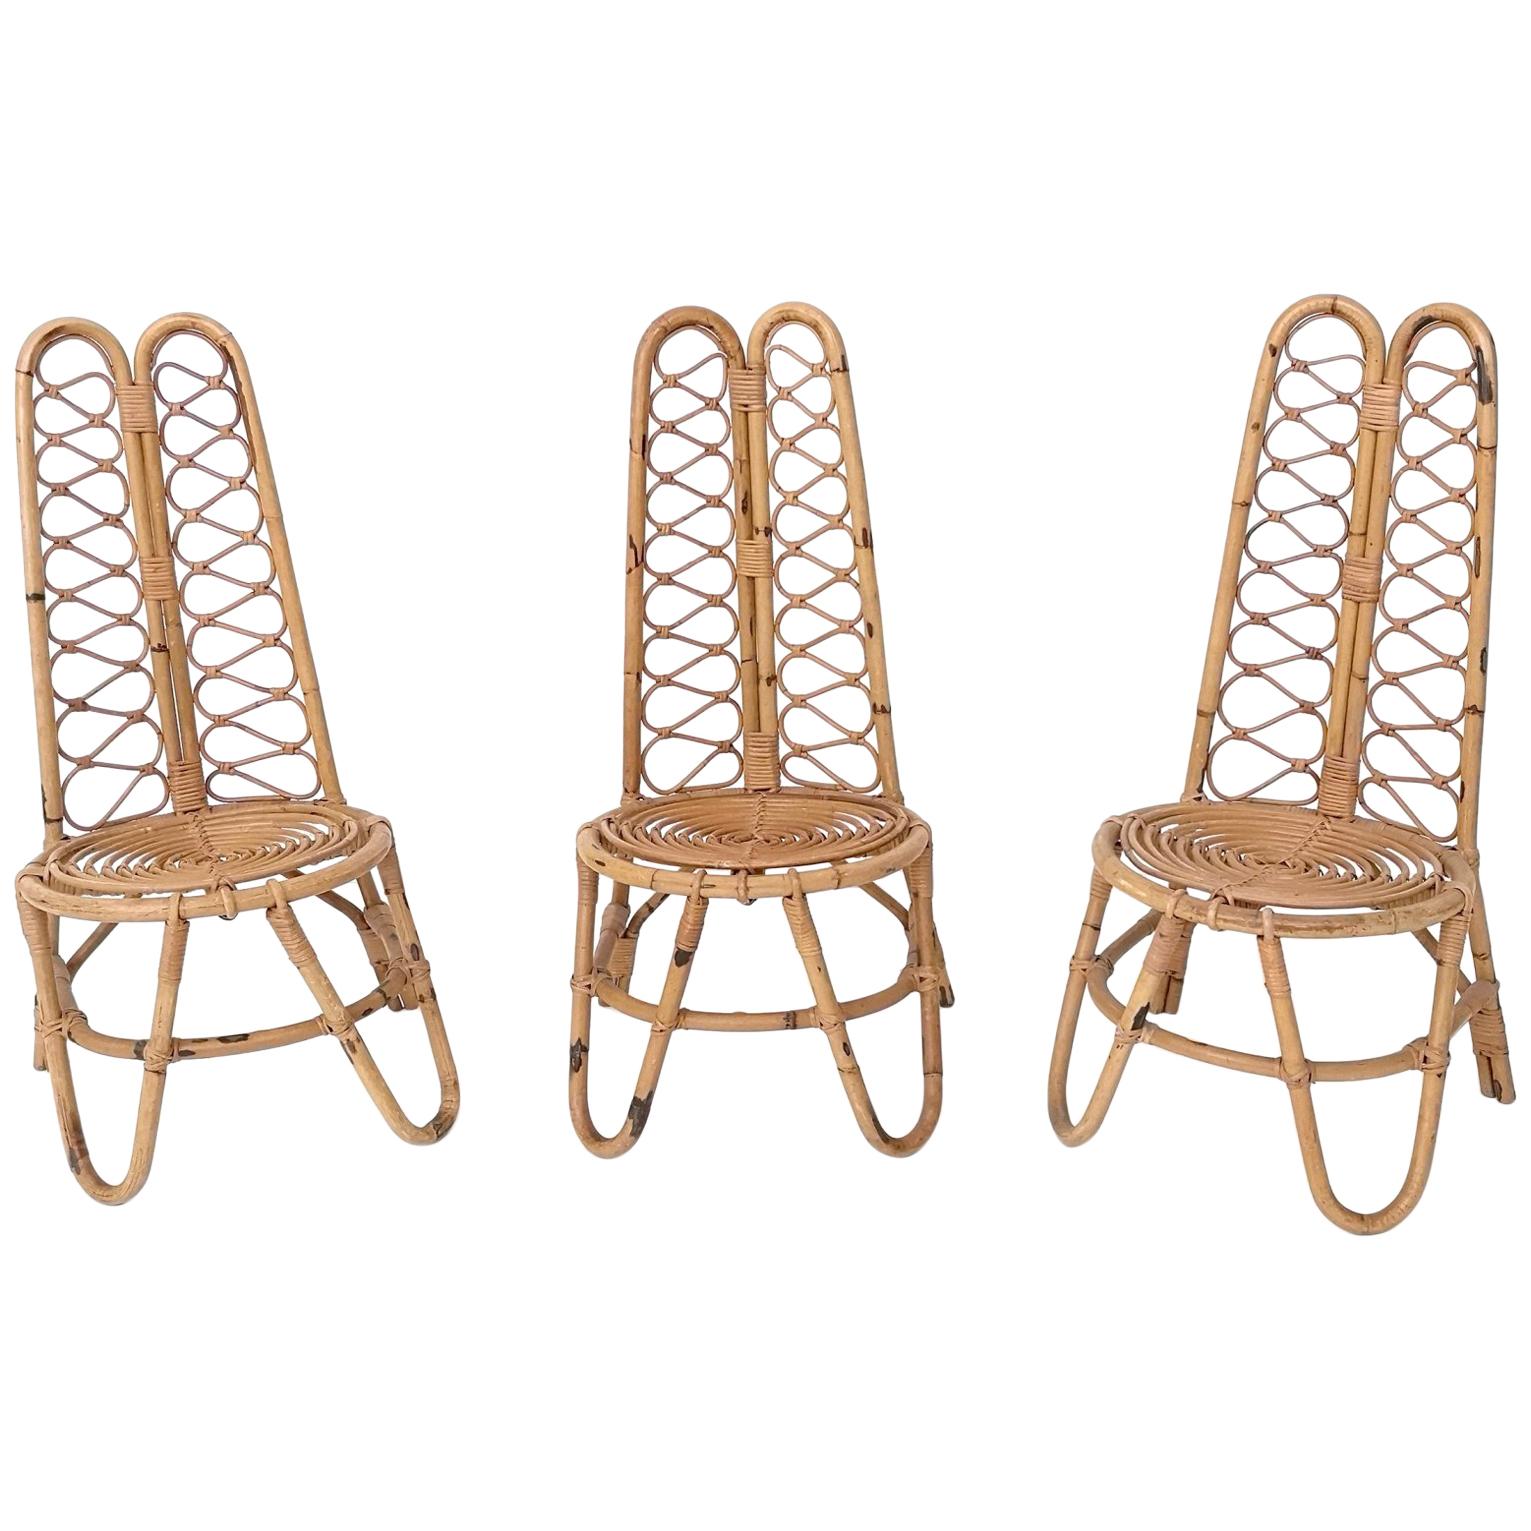 Set of Three Midcentury Bamboo Chairs, Italy 1950s